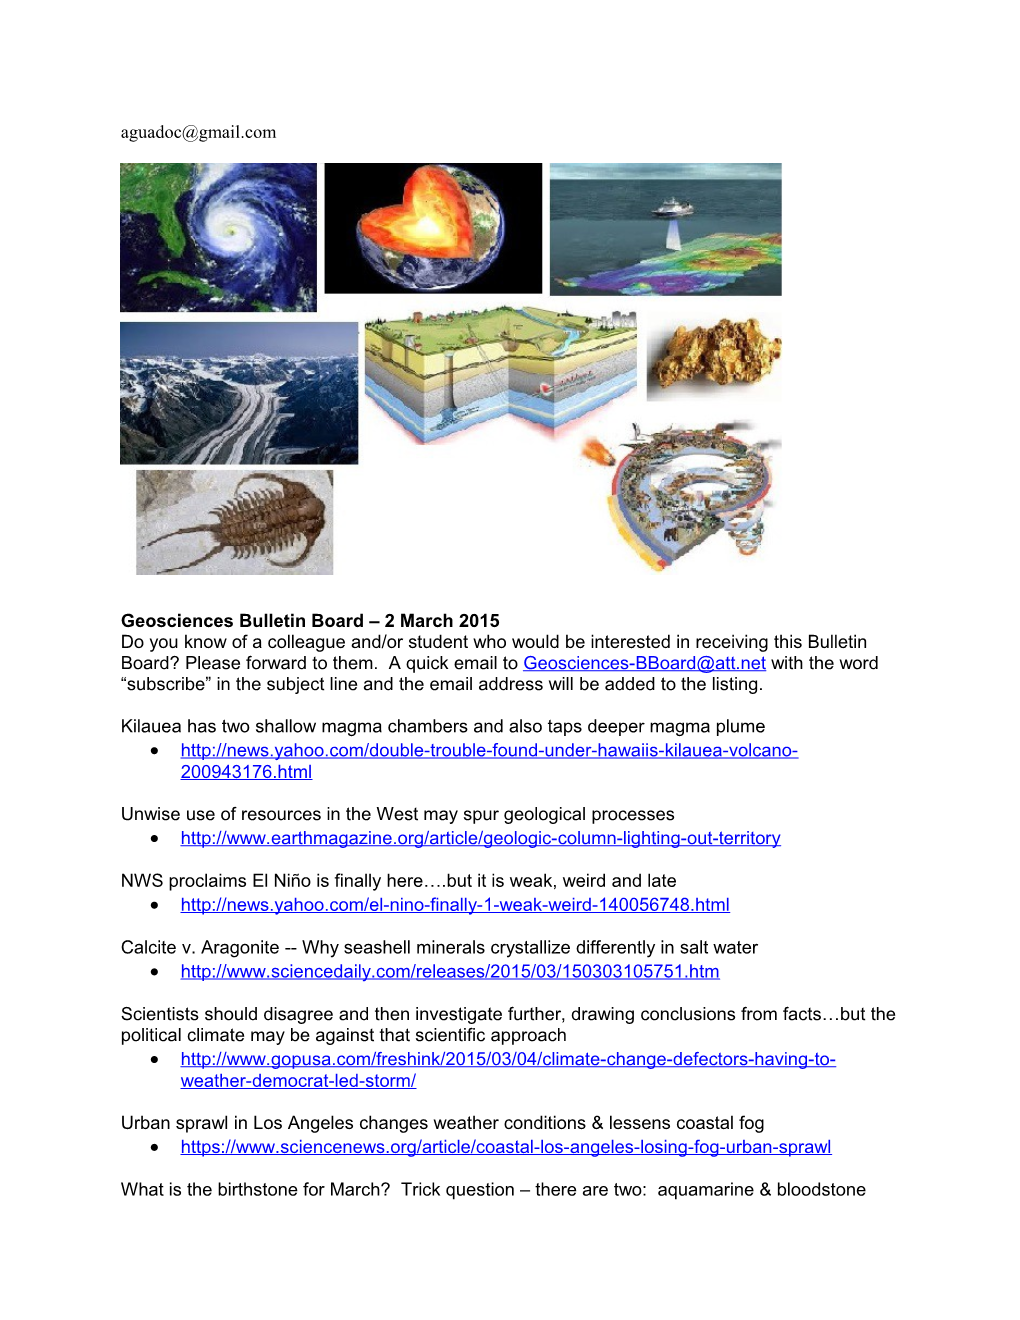 Geosciences Bulletin Board 2 March 2015